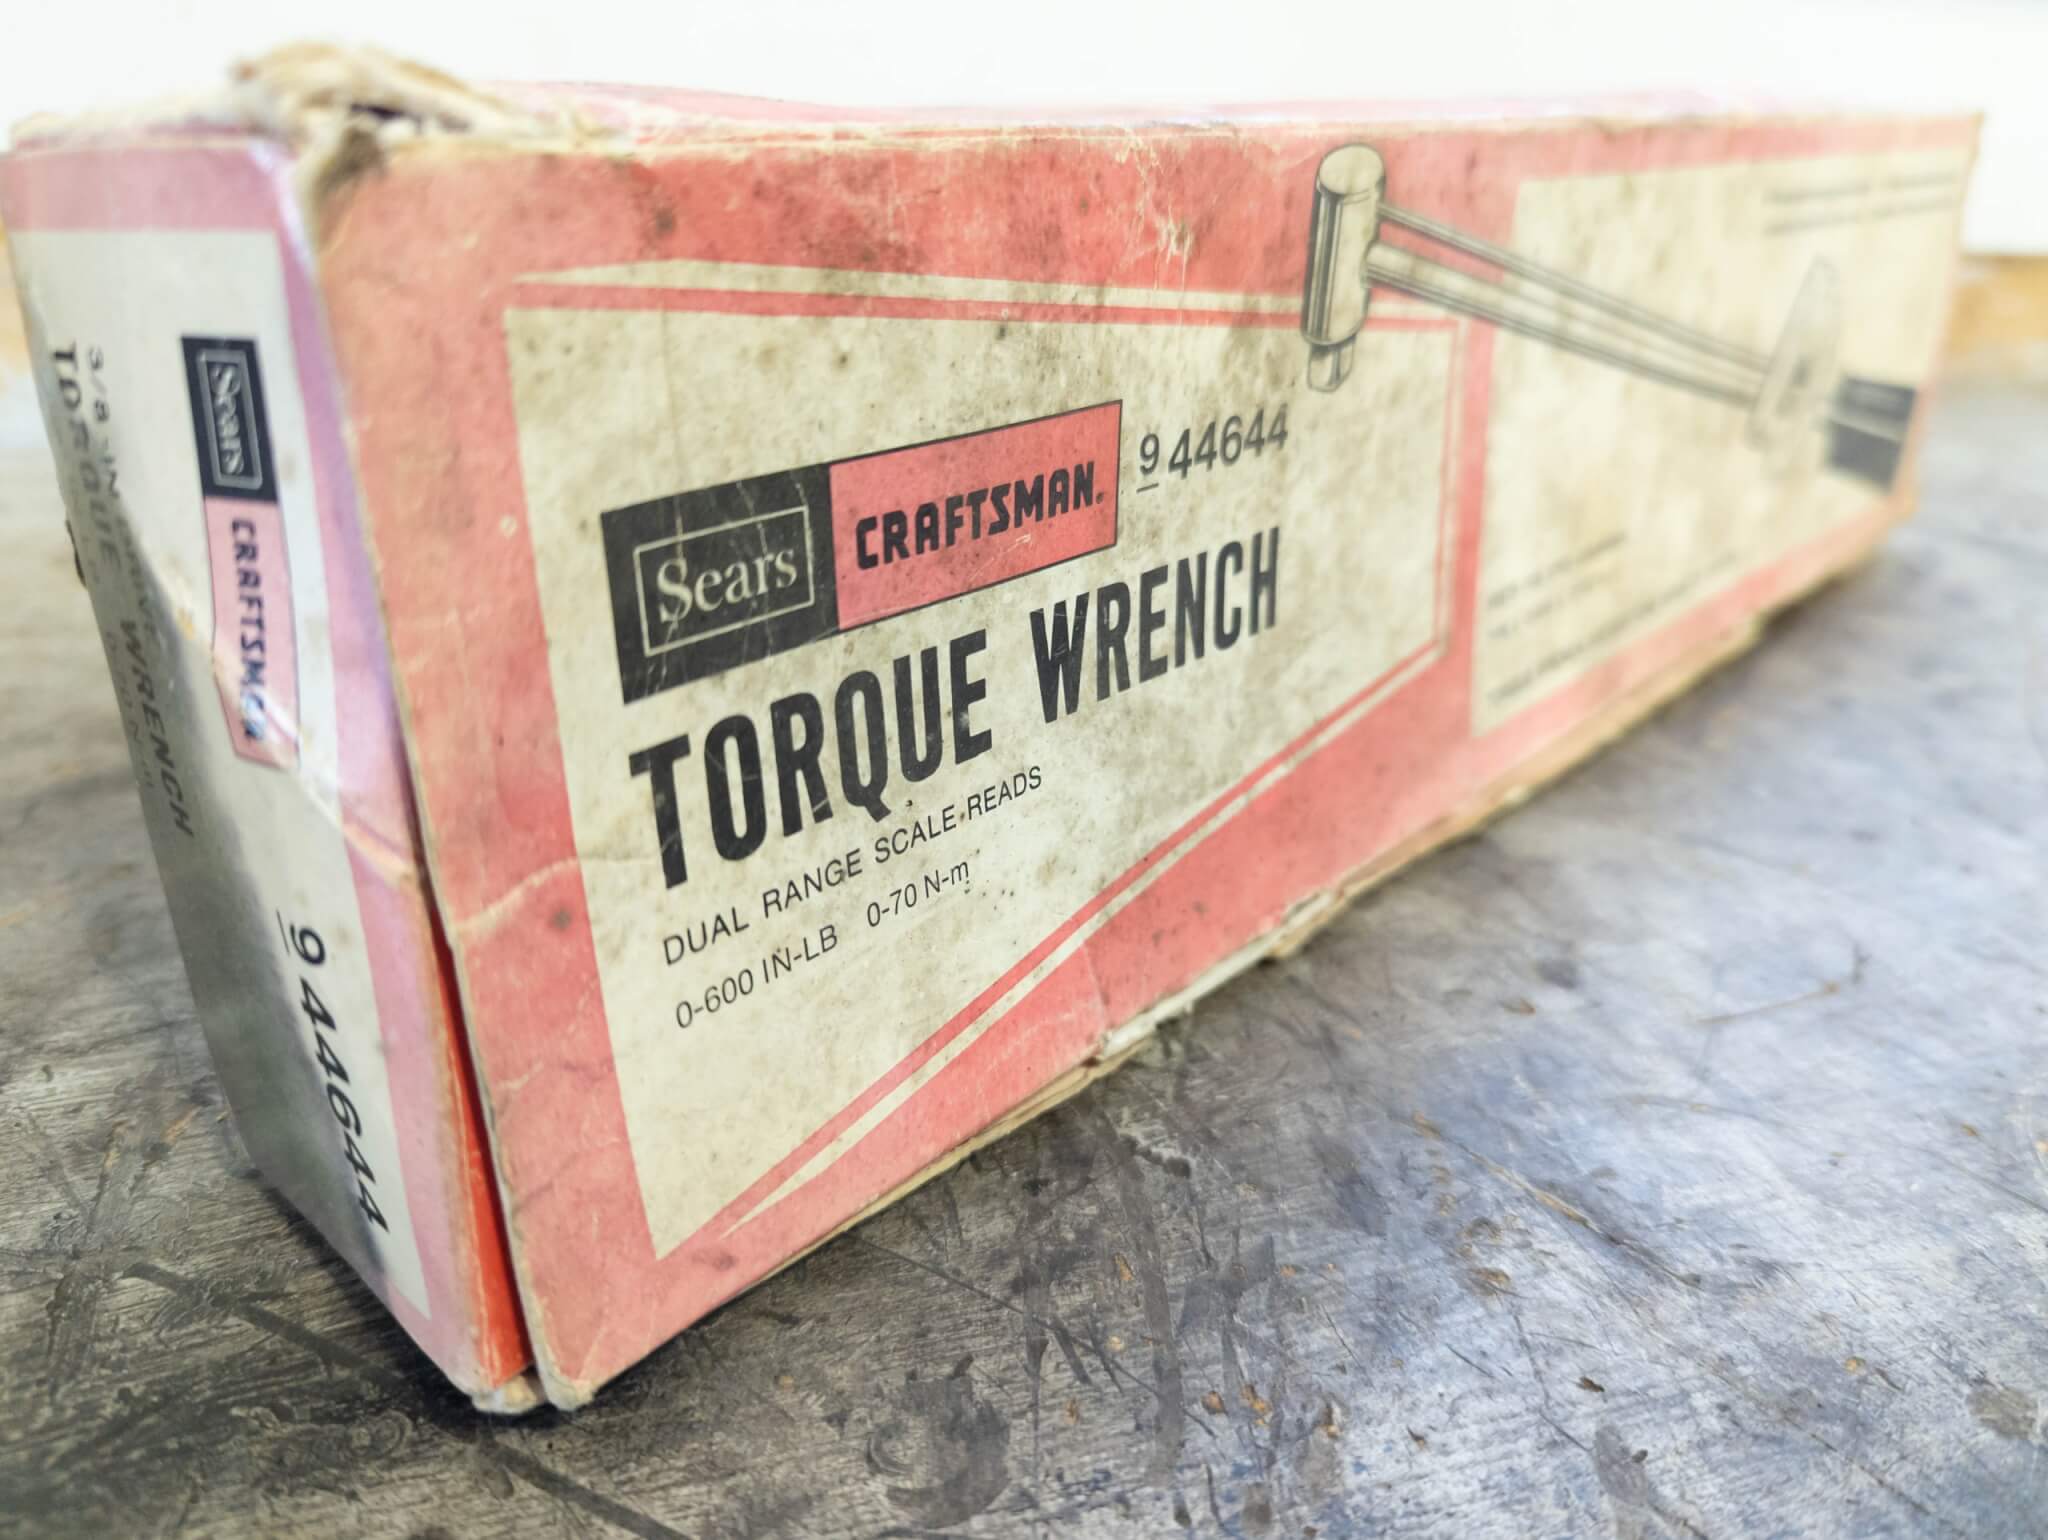 Torque wrench box